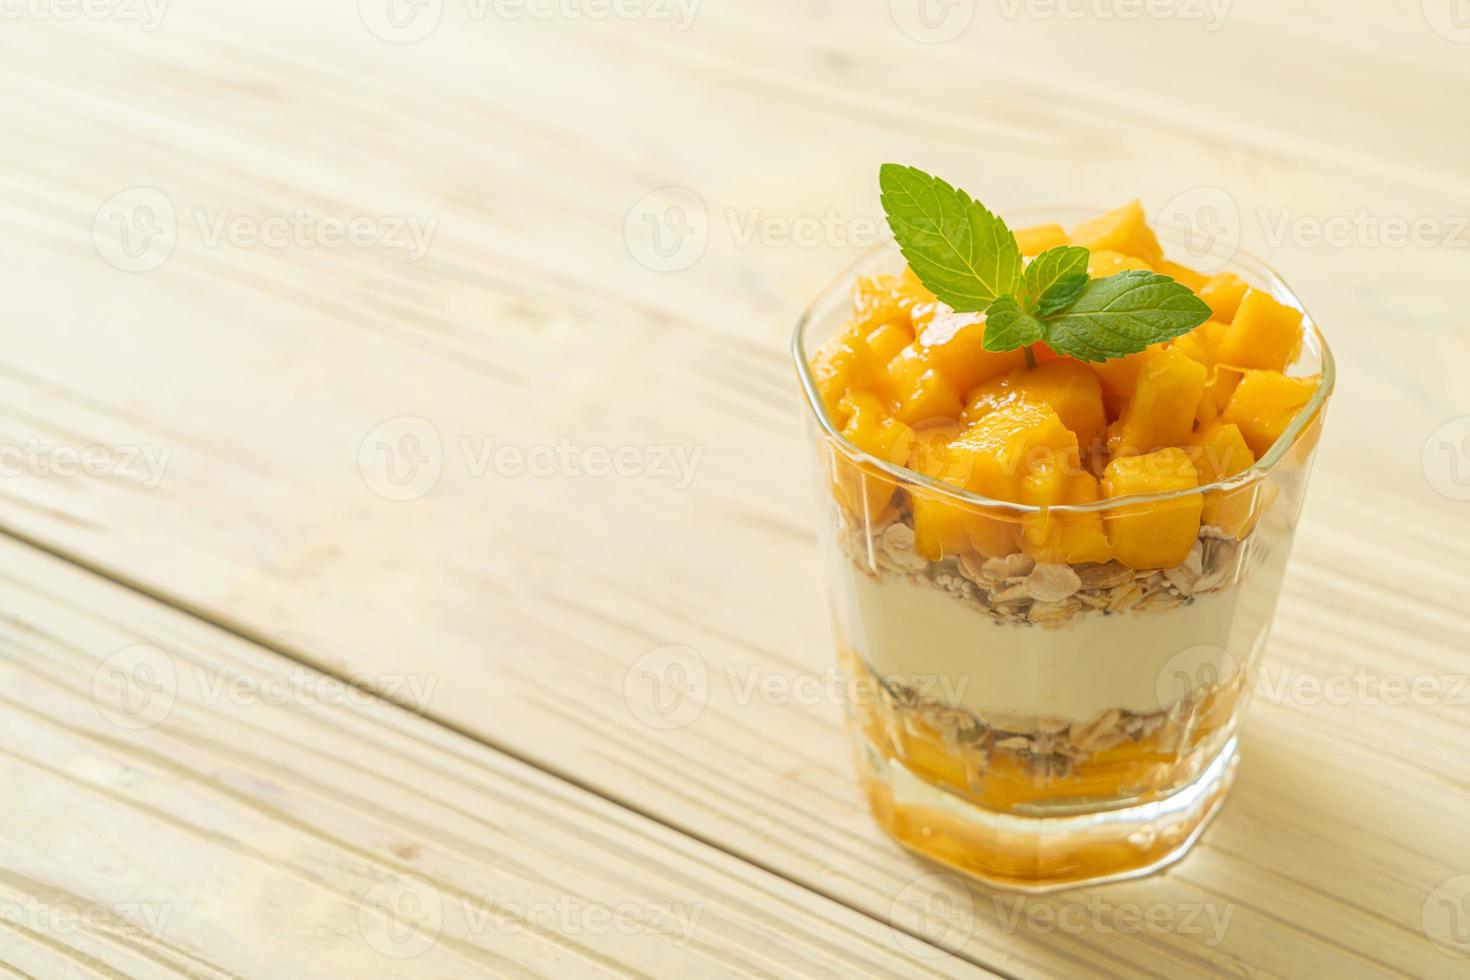 Fresh mango yogurt with granola in glass - healthy food style photo